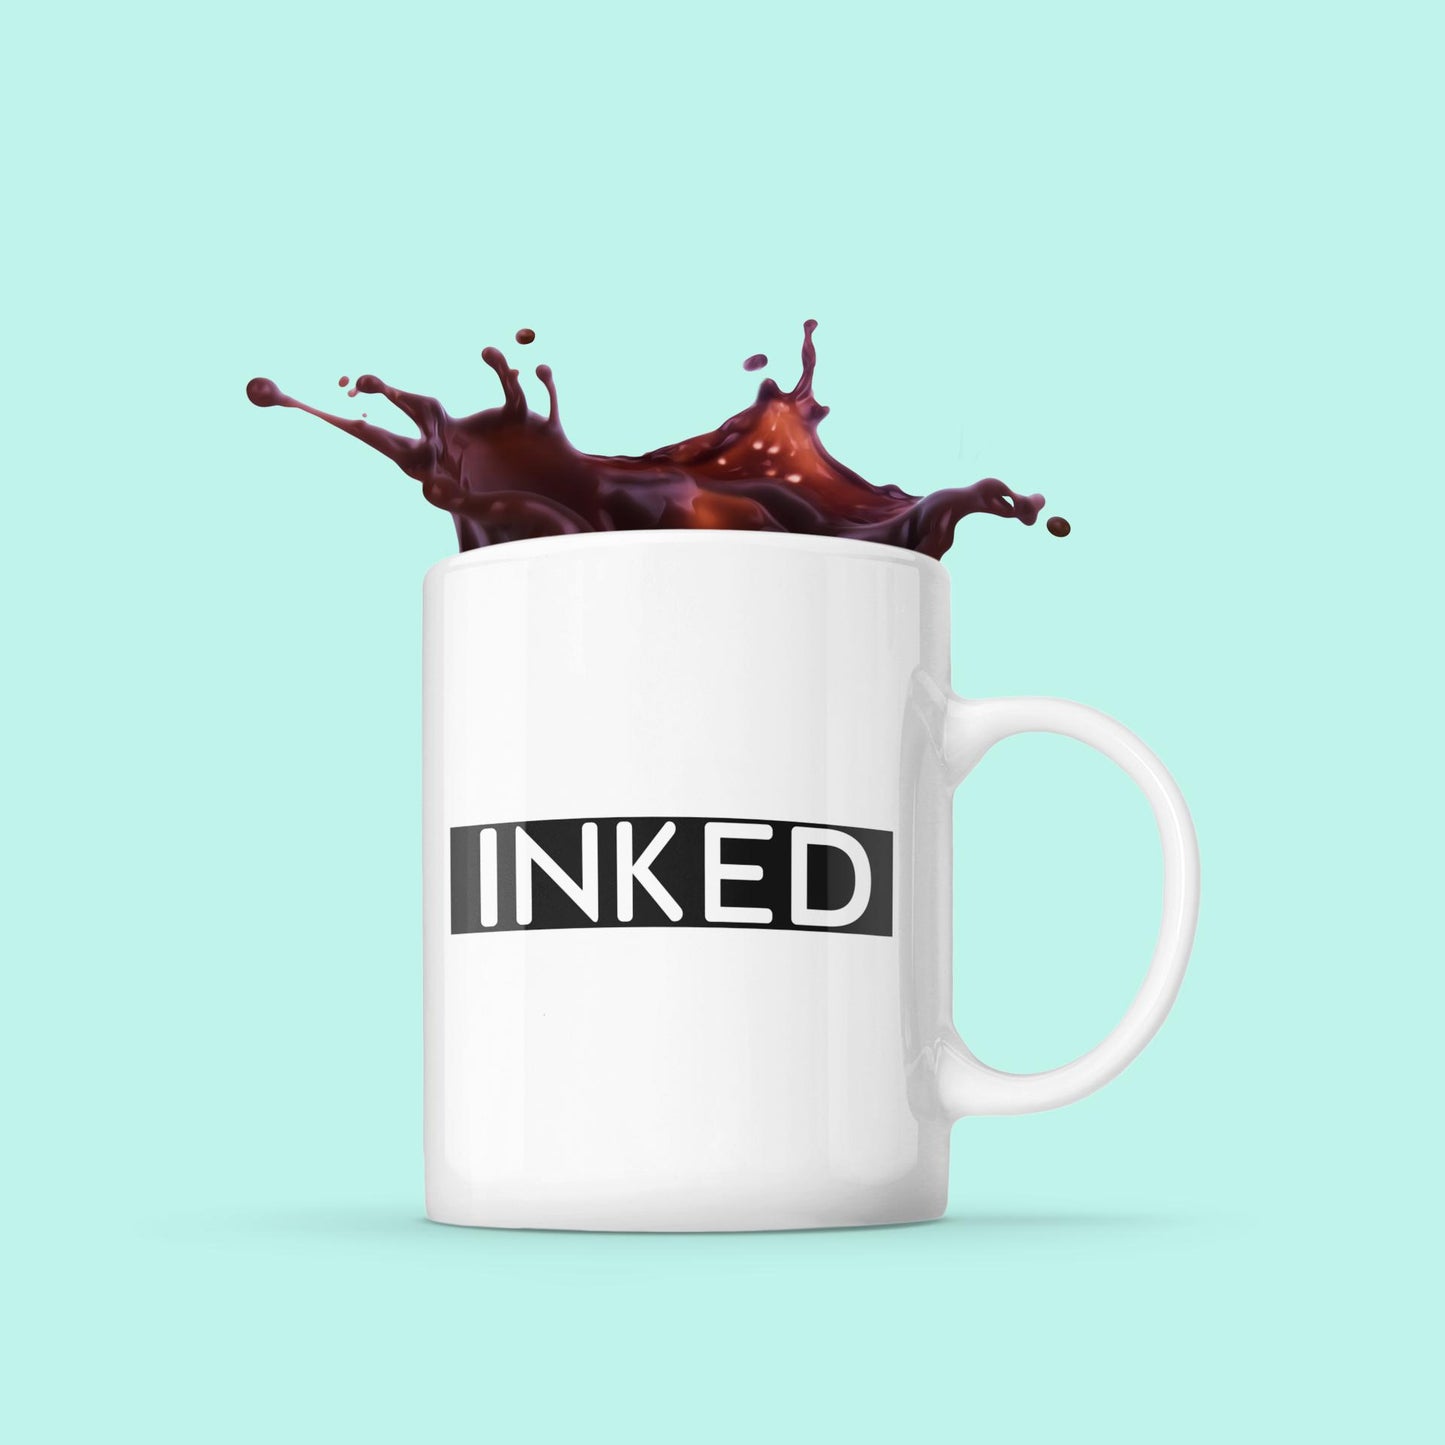 Inked - Coffee